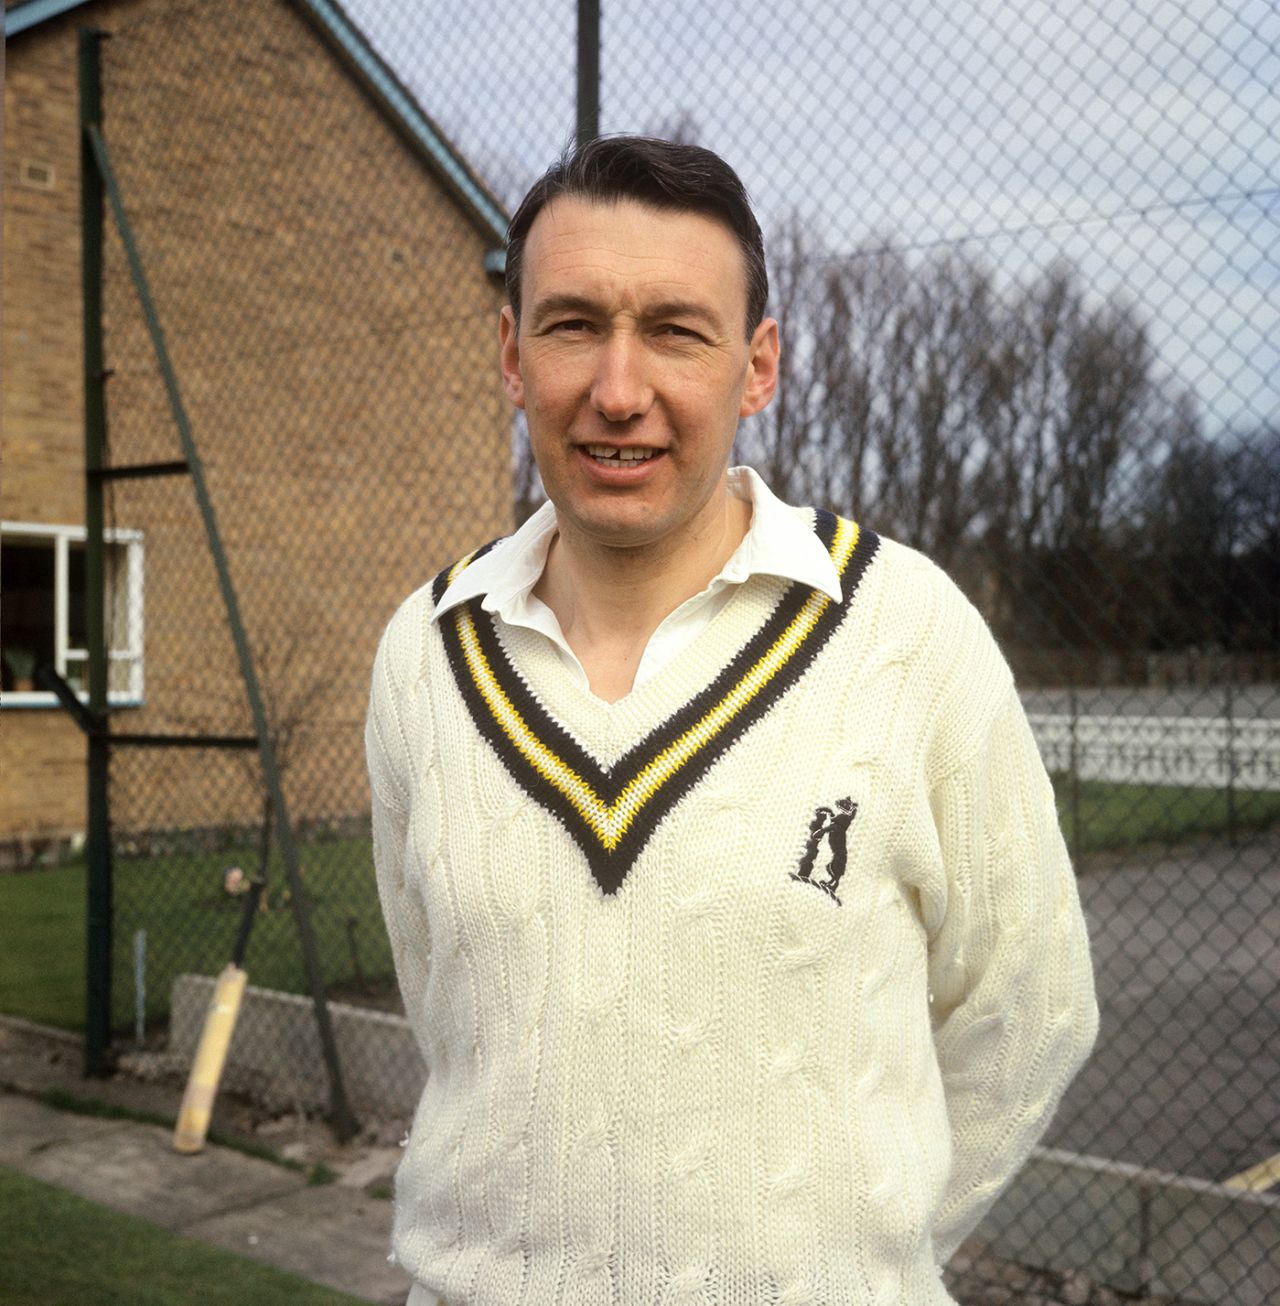 Tom Cartwright at Edgbaston at the start of the county season, April 4, 1969